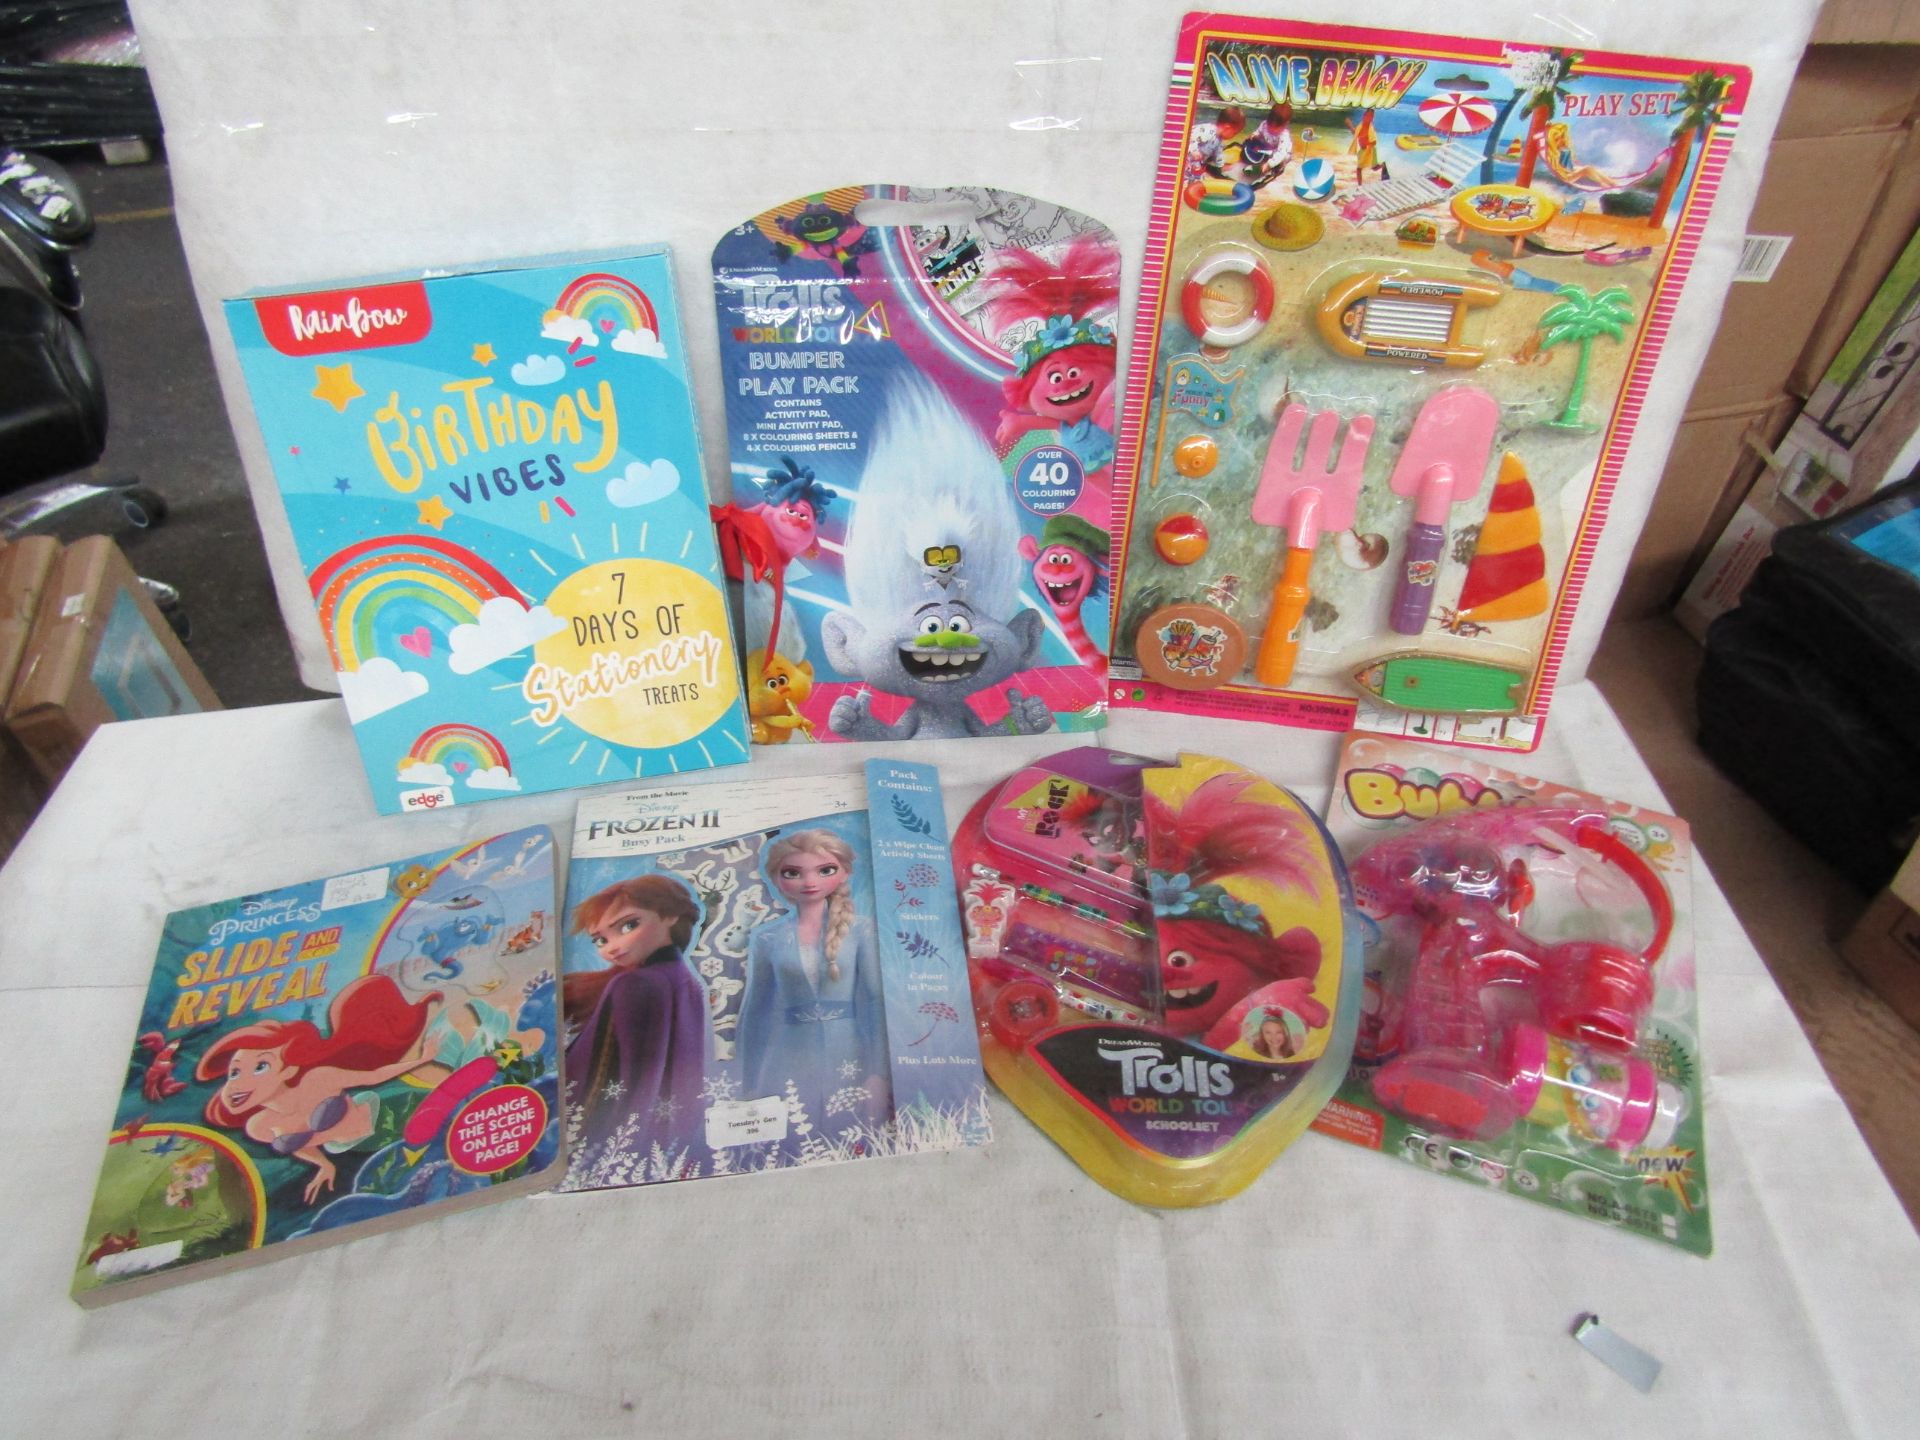 1X Rainbow - Birthday Vibes 7-Days of Stationary Treats - Boxed. 1X Disney Princess - Slide & Reveal